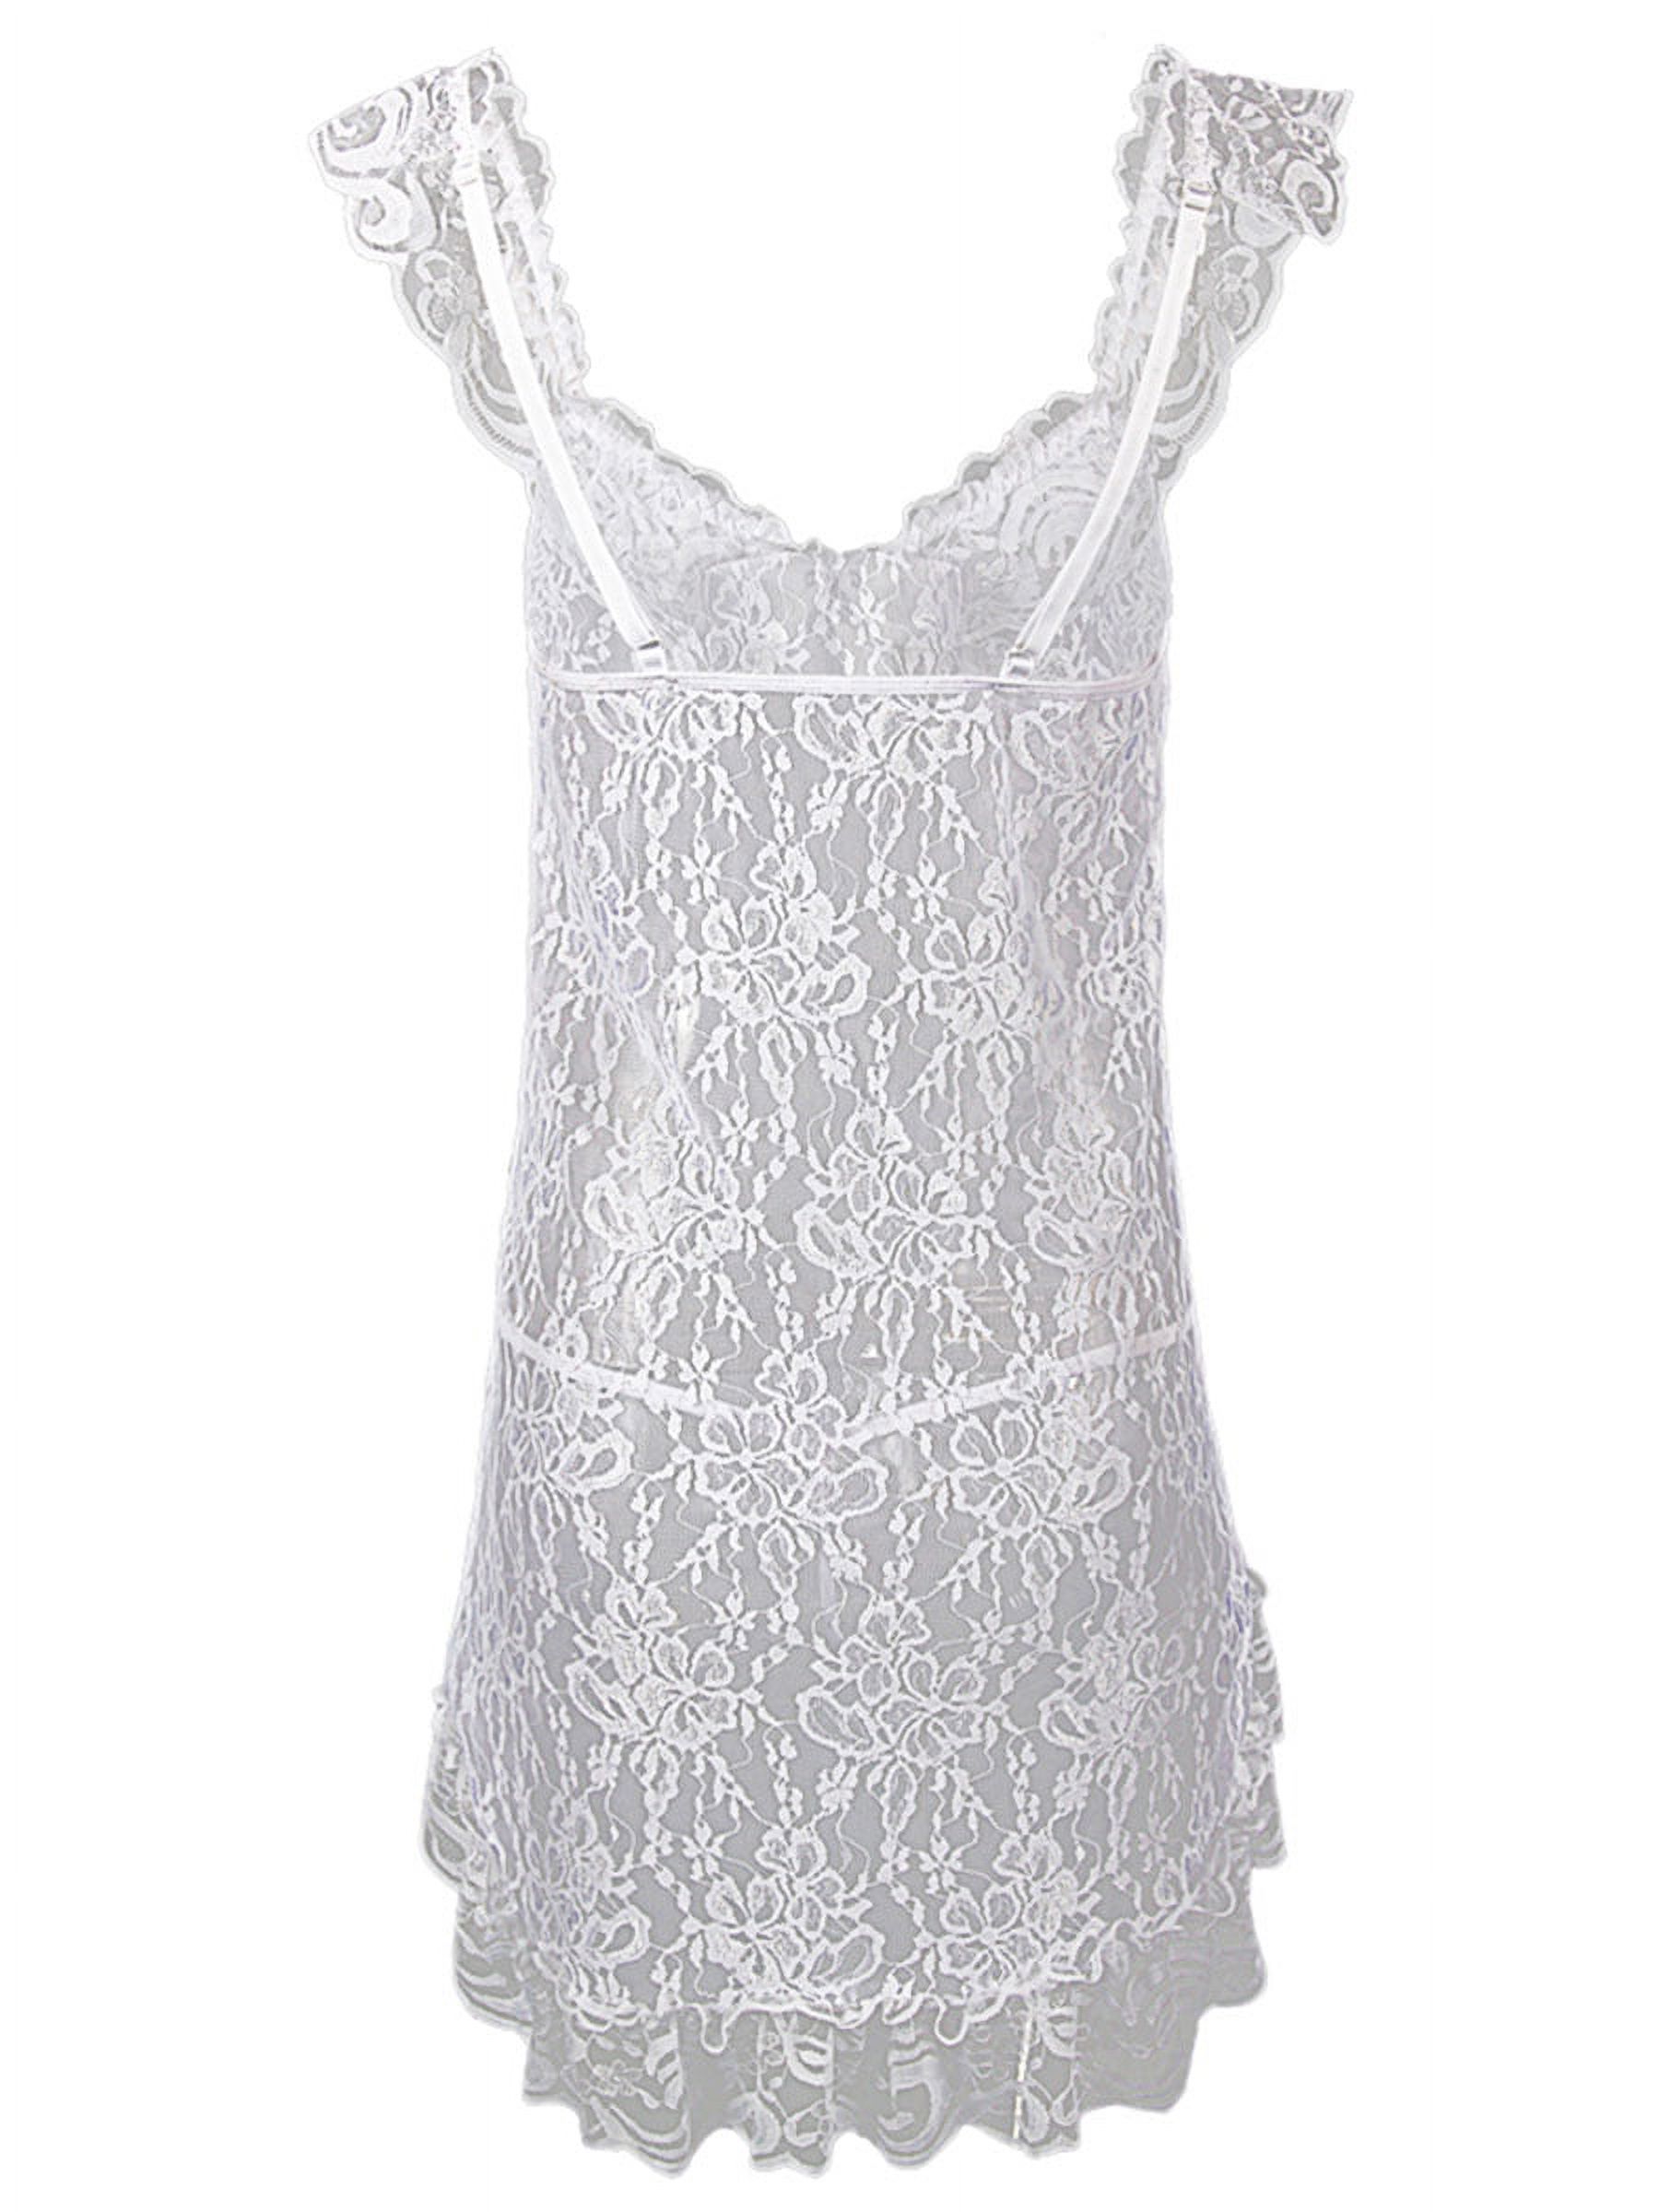 STARVNC Womens Chemise Lace Lingerie Babydoll Dress Sleepwear - image 4 of 6